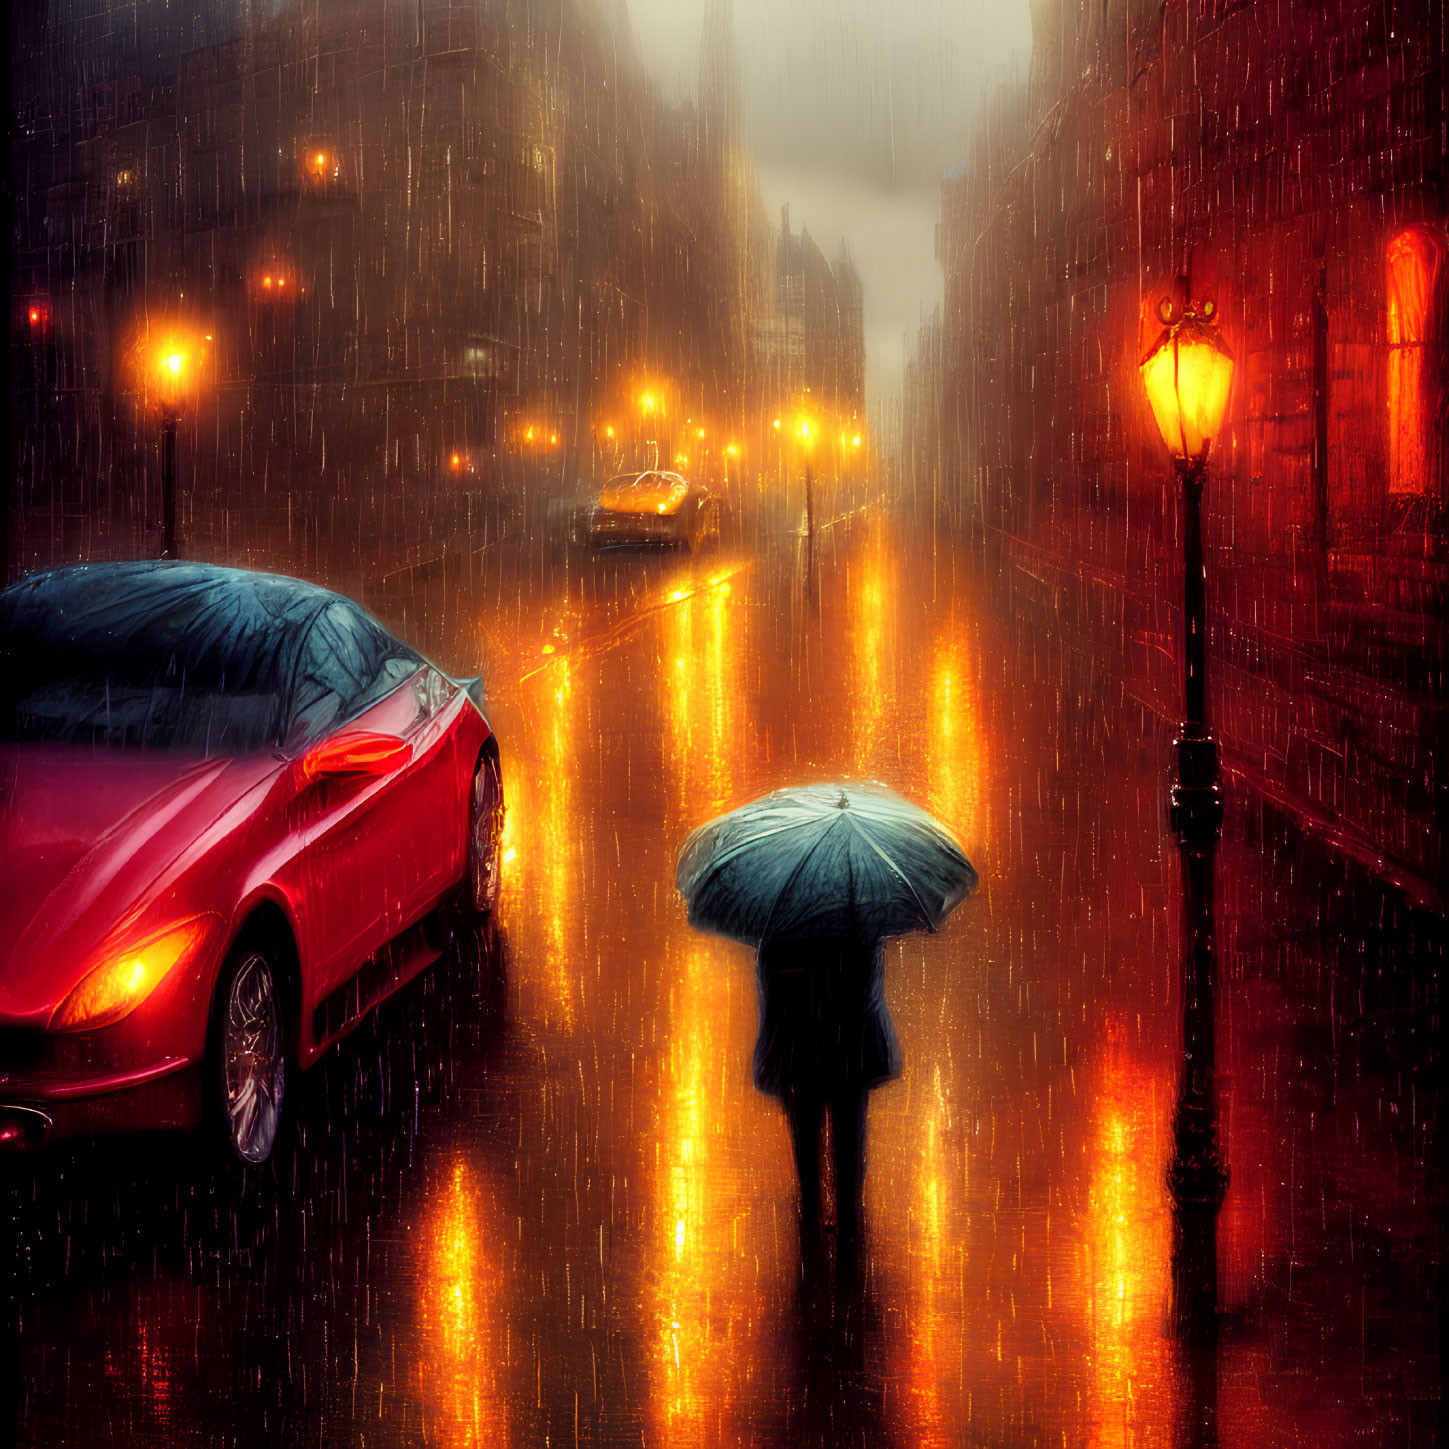 Pedestrian with umbrella on rainy street under warm streetlights and car.